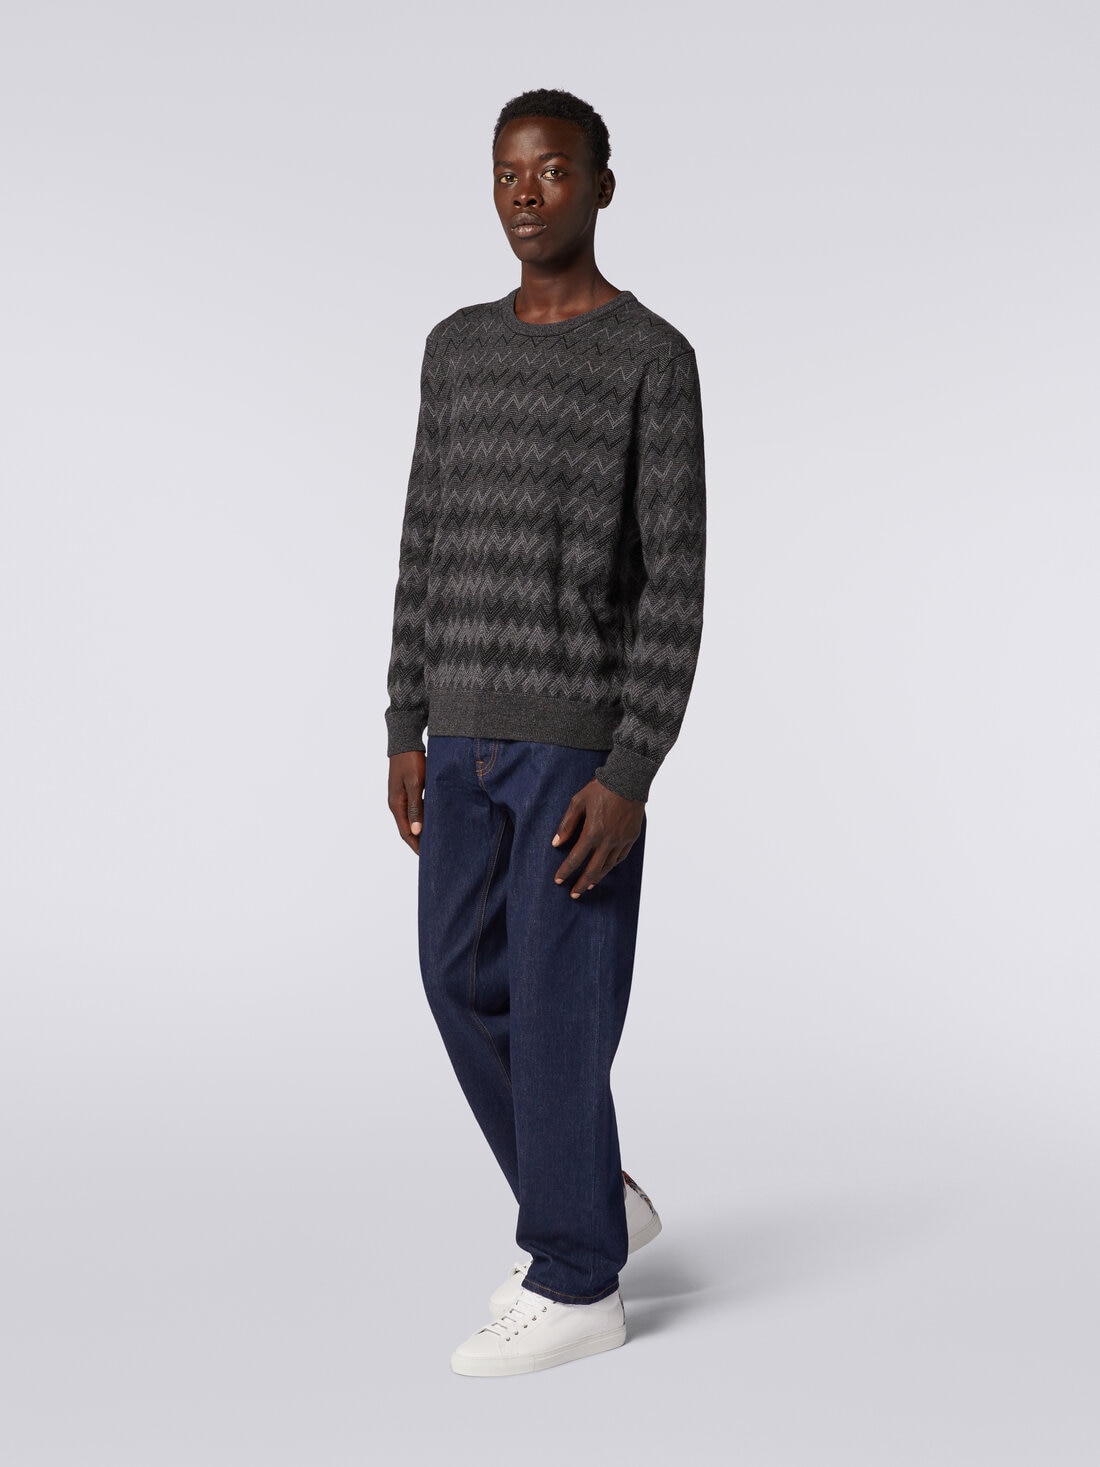 Cashmere crew-neck sweater with zigzags, Black & Grey - US23WN0VBK033KS91I1 - 2